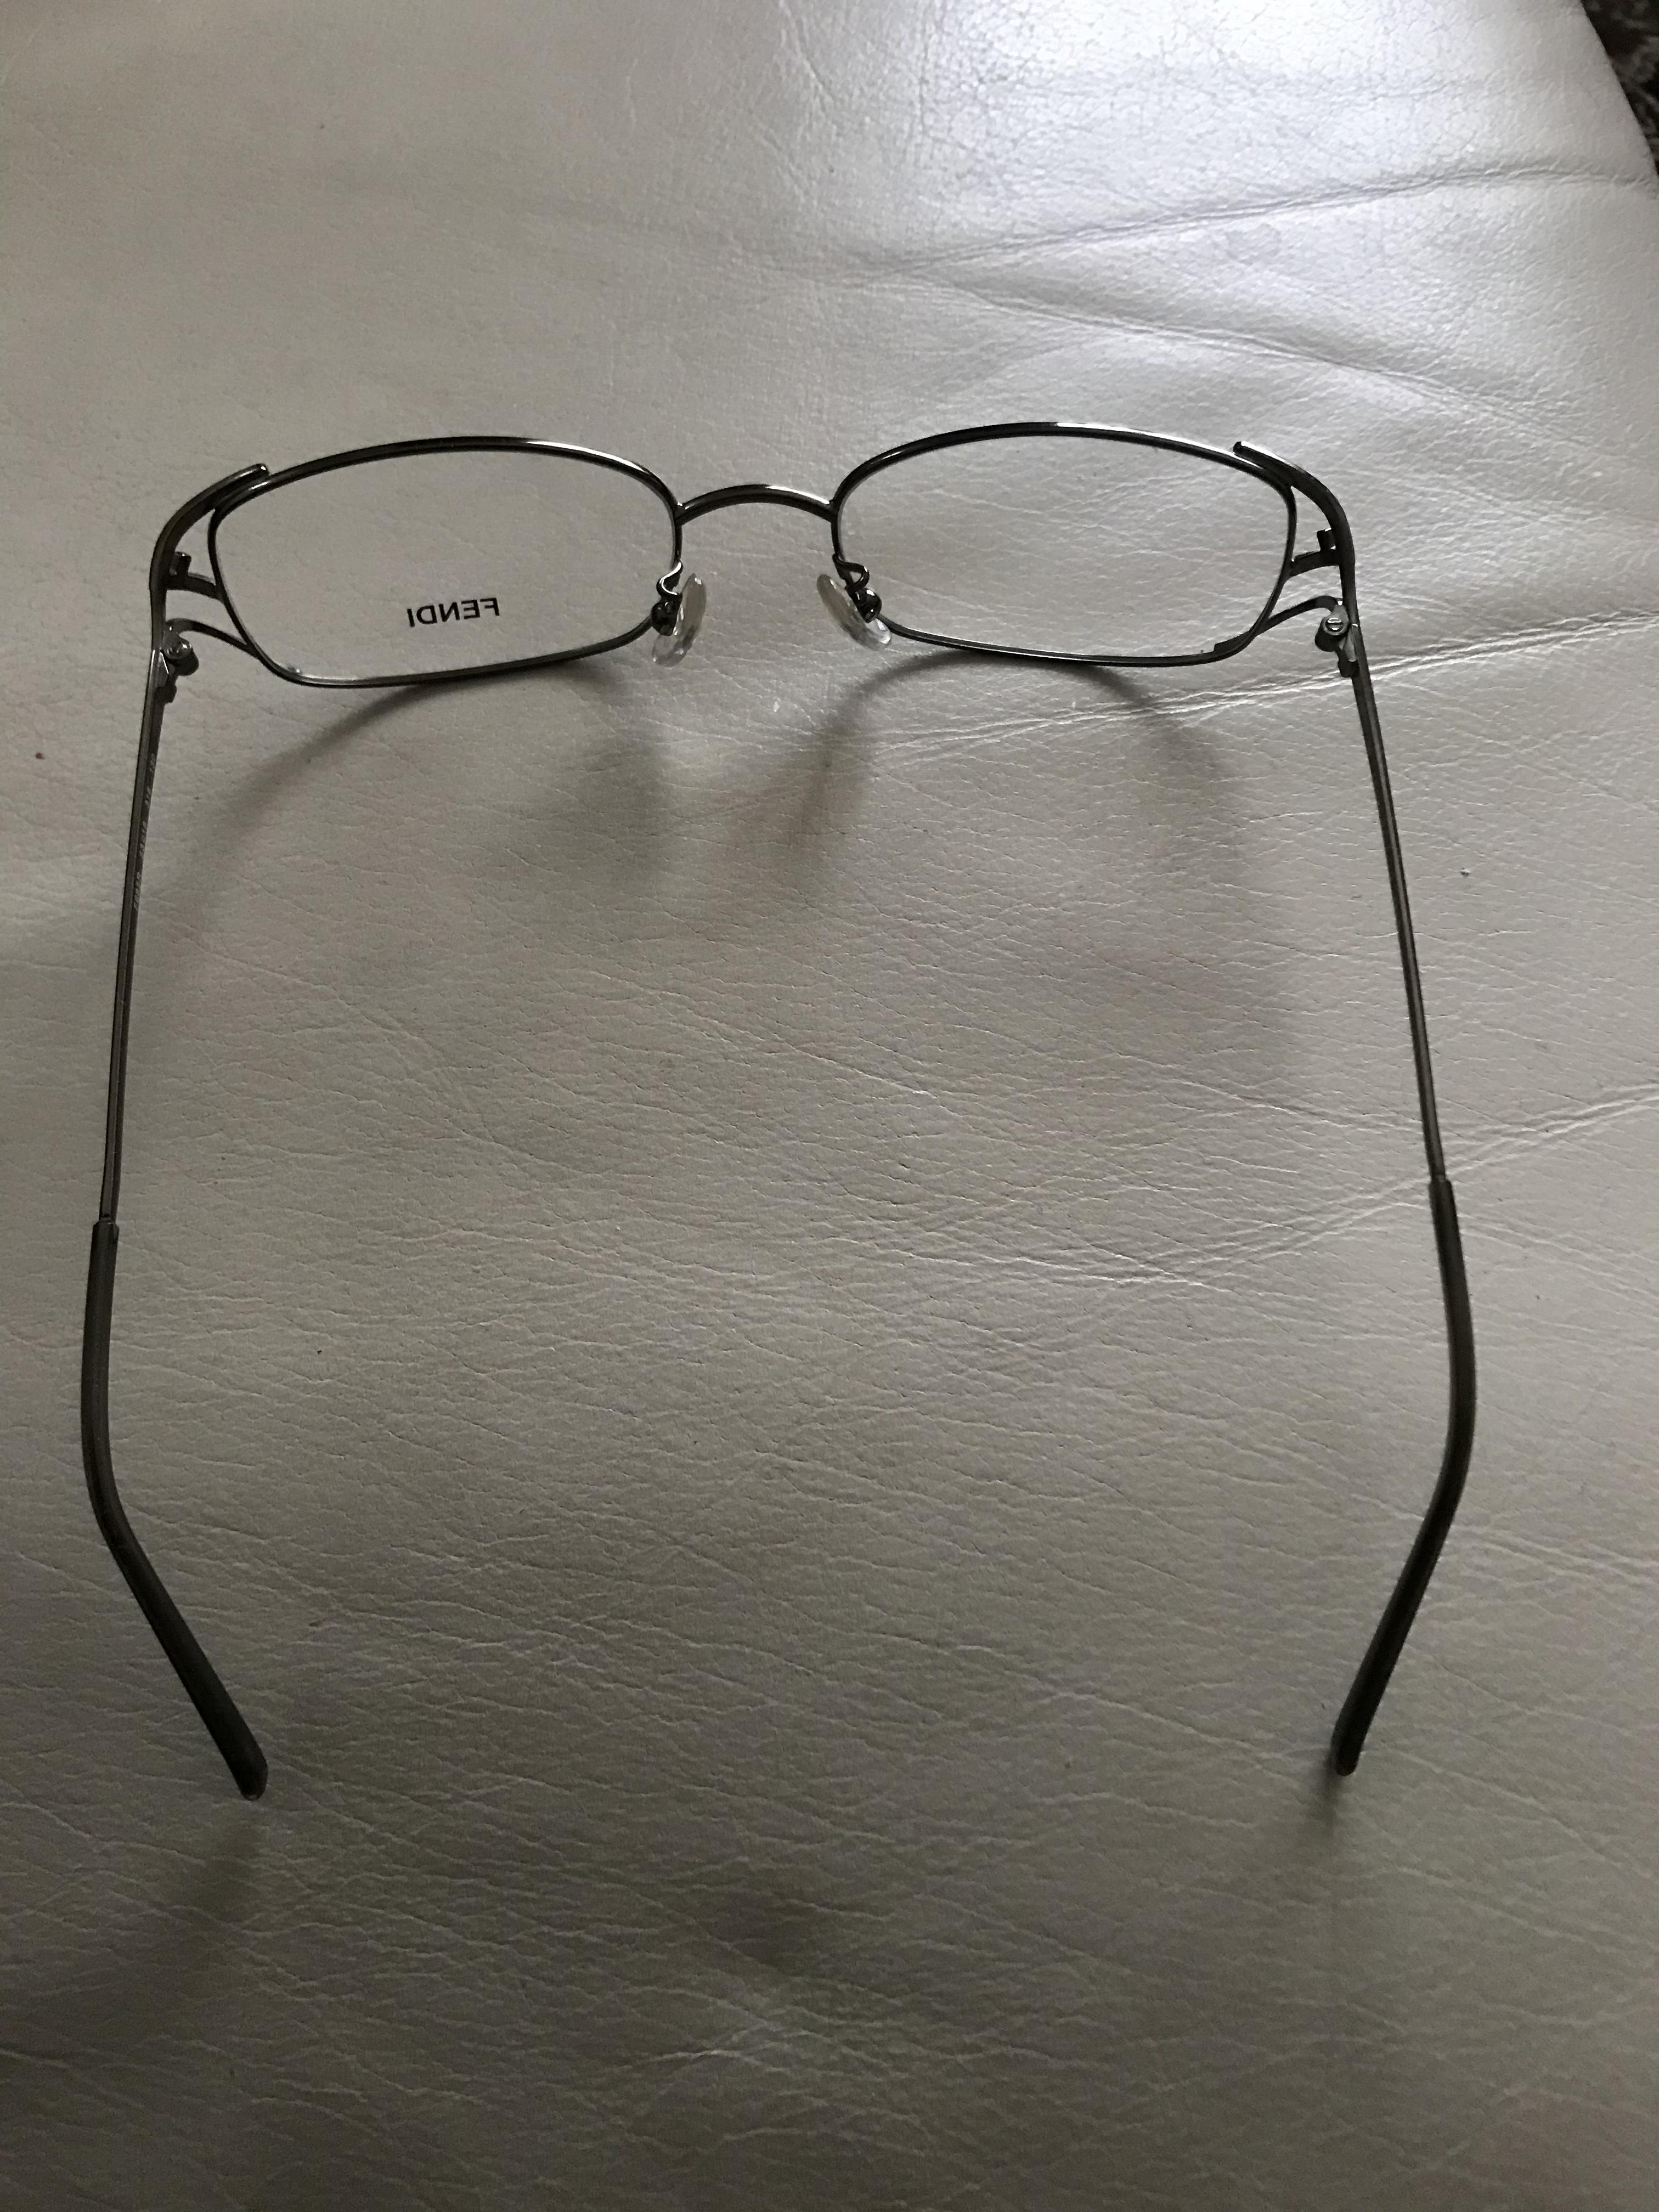 Fendi eyeglasses - Brand new - Image 2 of 9